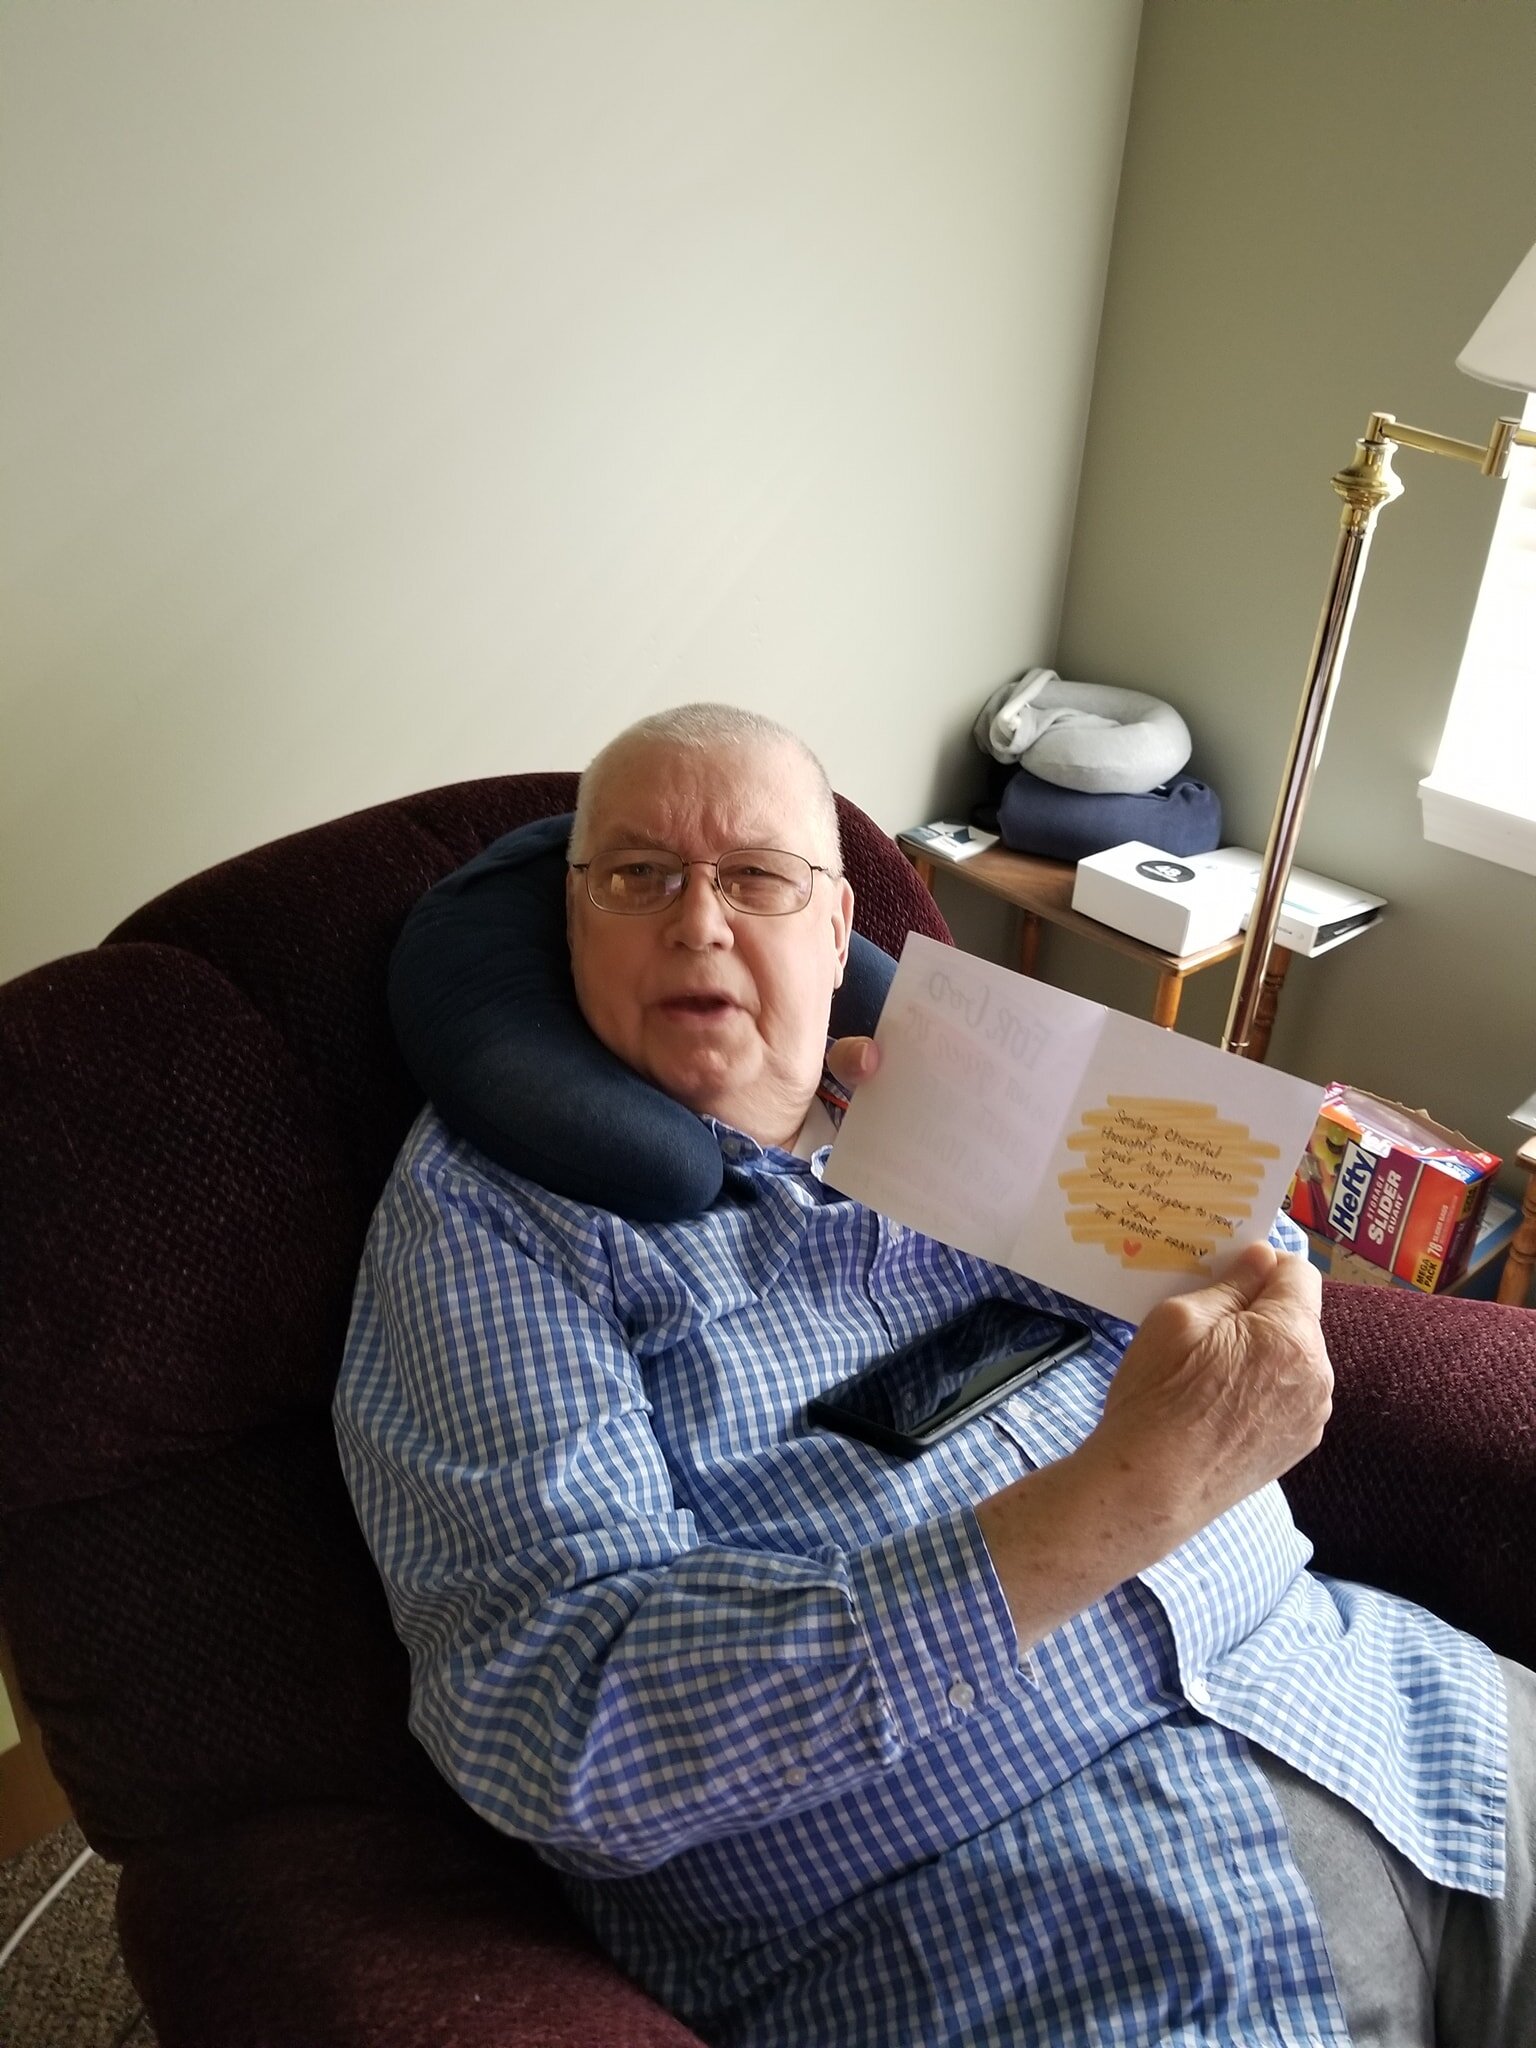 encouragement card opened by nursing home resident during COVD19 resident in southwest missouri.jpg